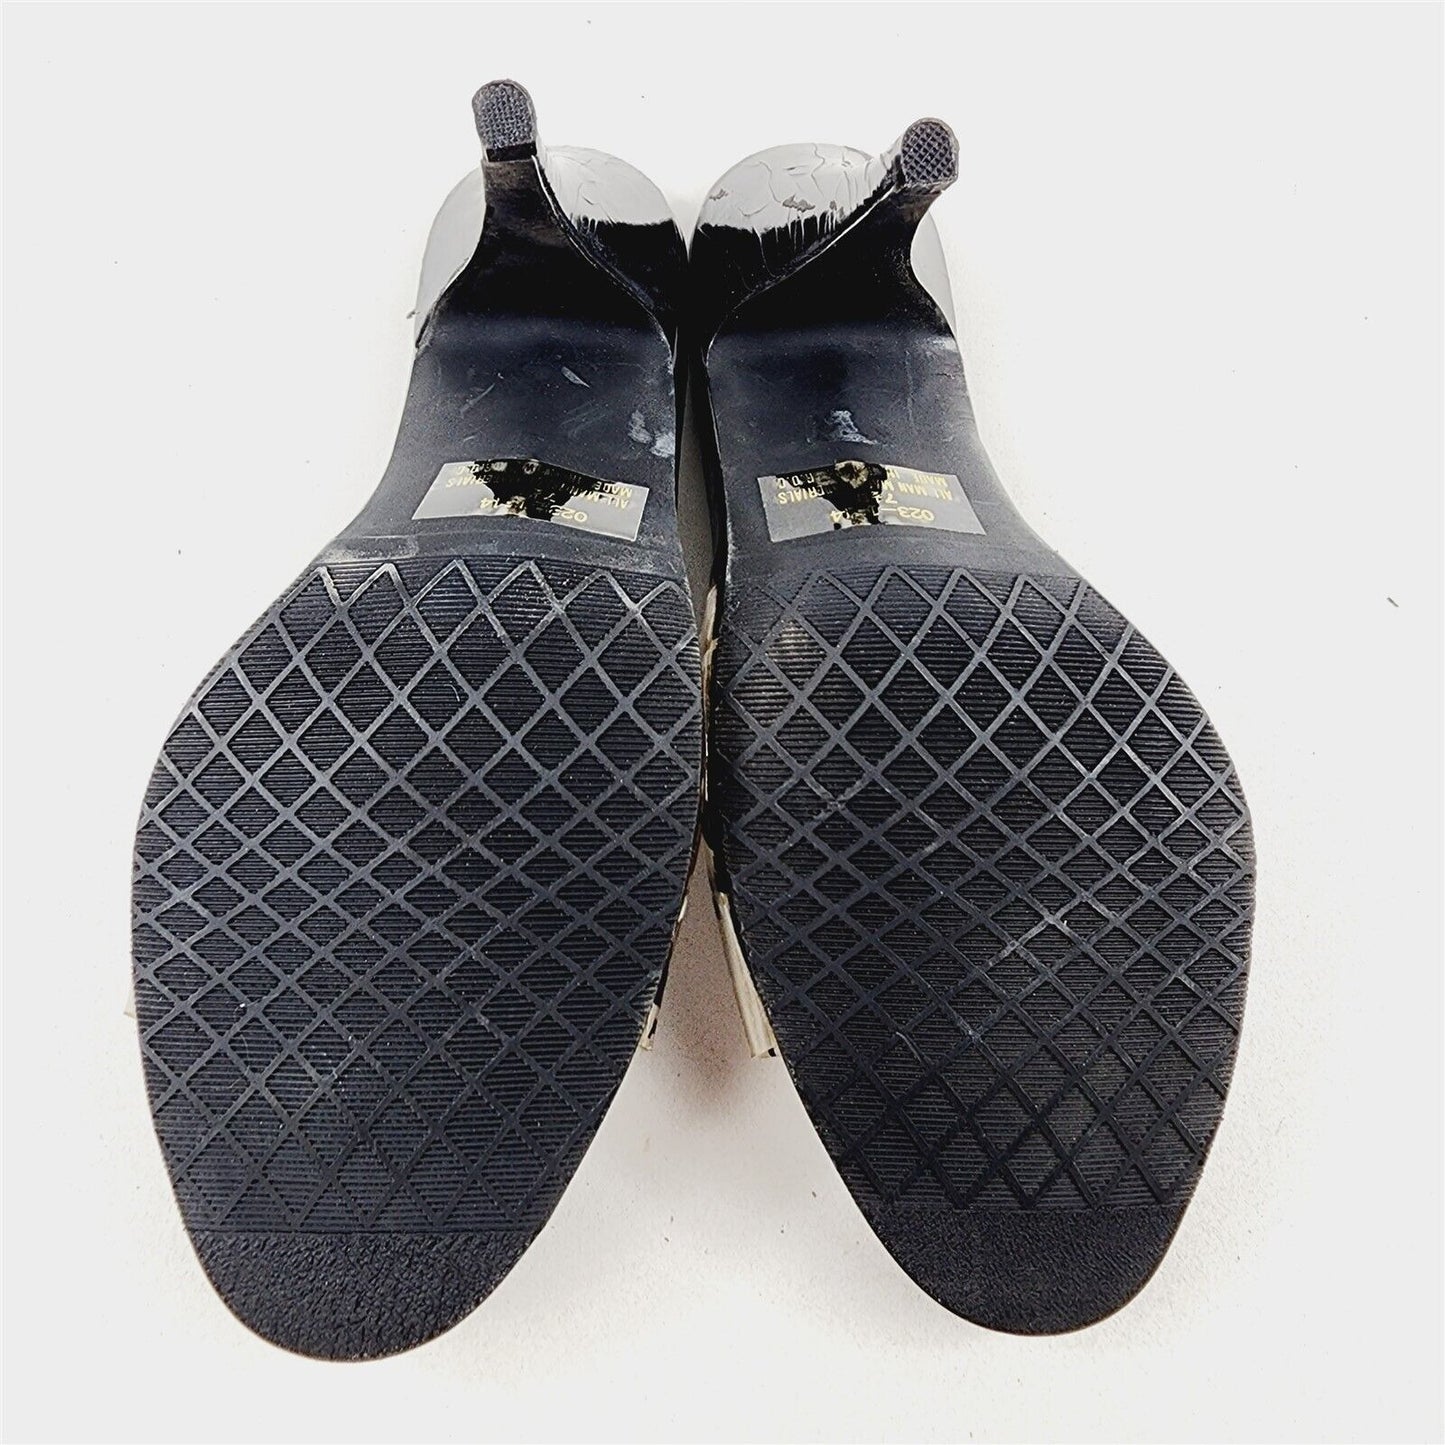 Vintage French Navy Black & White Paint Splatter Heels Shoes Pumps Size 7.5